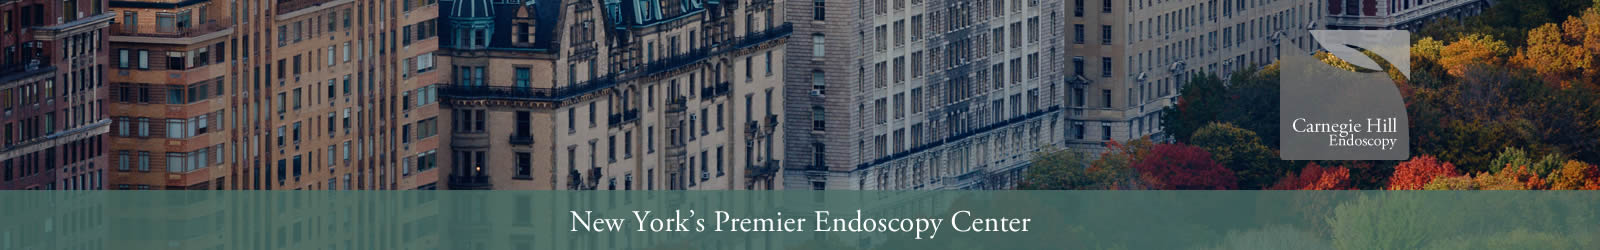 New York's Premier Endoscopy Center